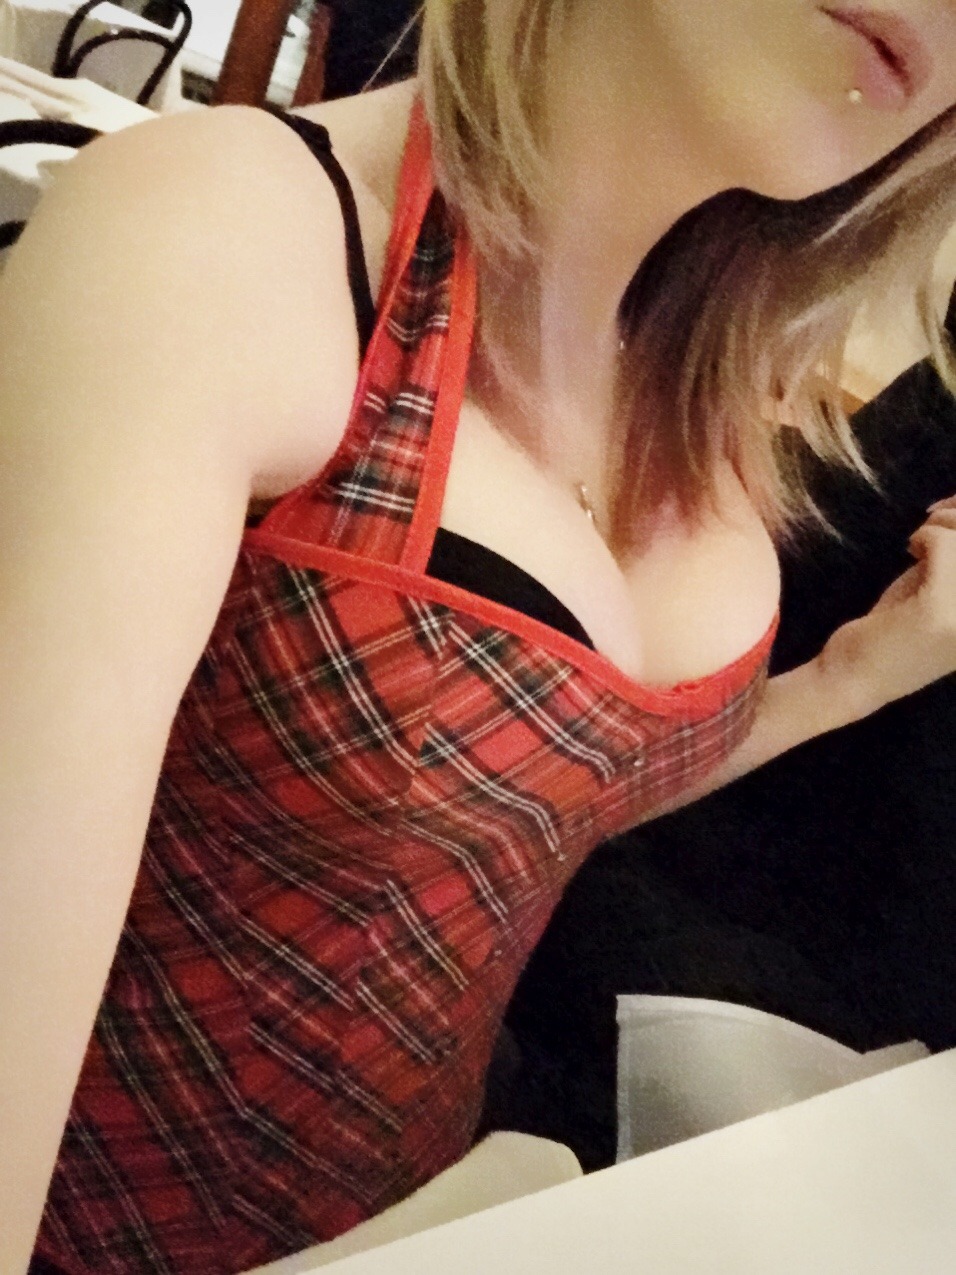 bimbofication-of-little-slut:  Daddy got me a new corset for my birthday ❤️ Works